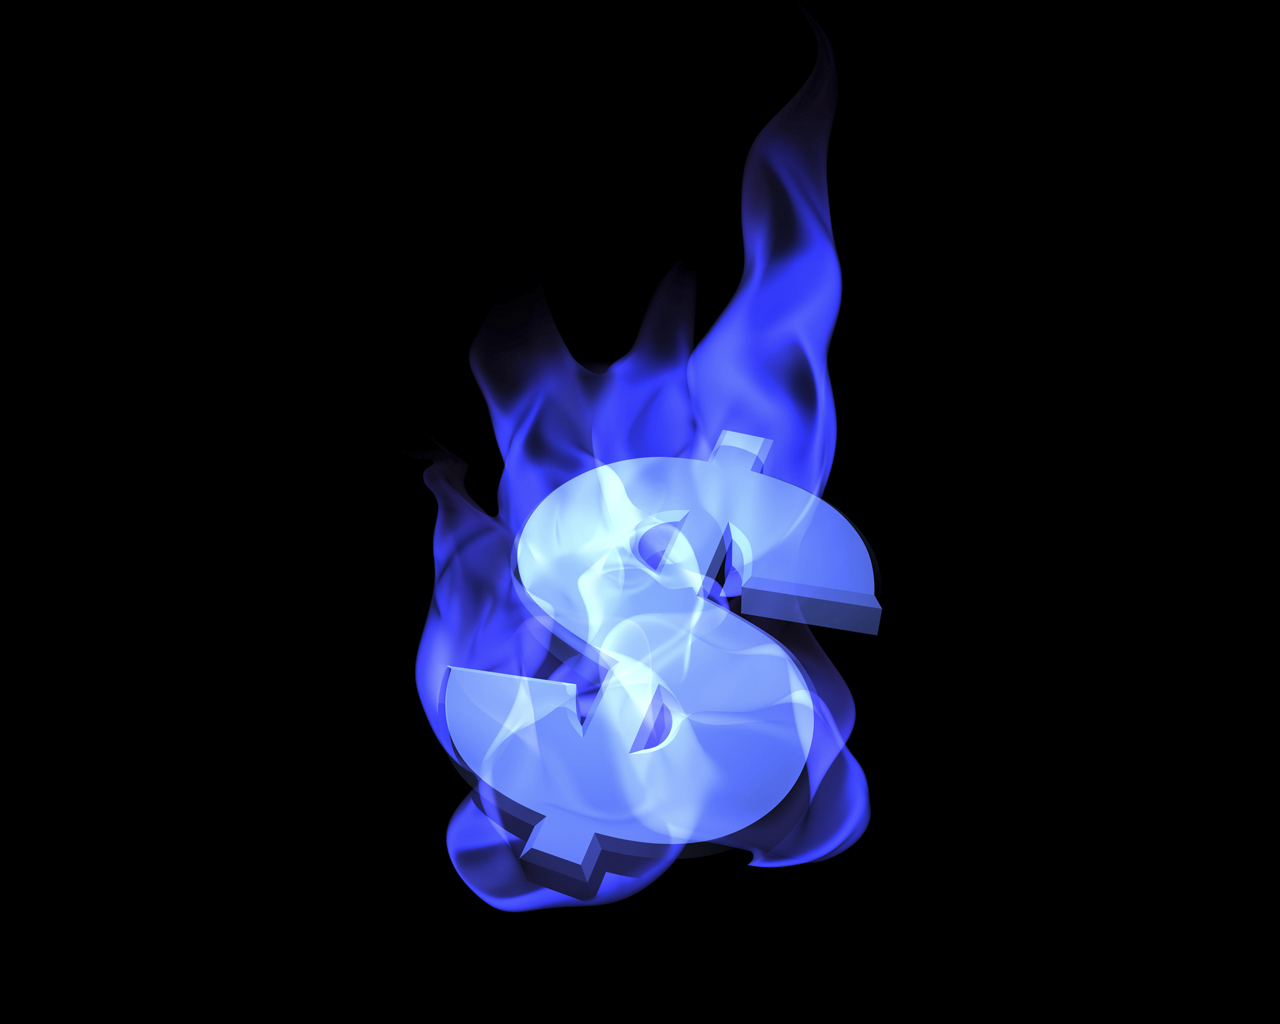 Previous, Creative Wallpaper - Burn it blue flame wallpaper